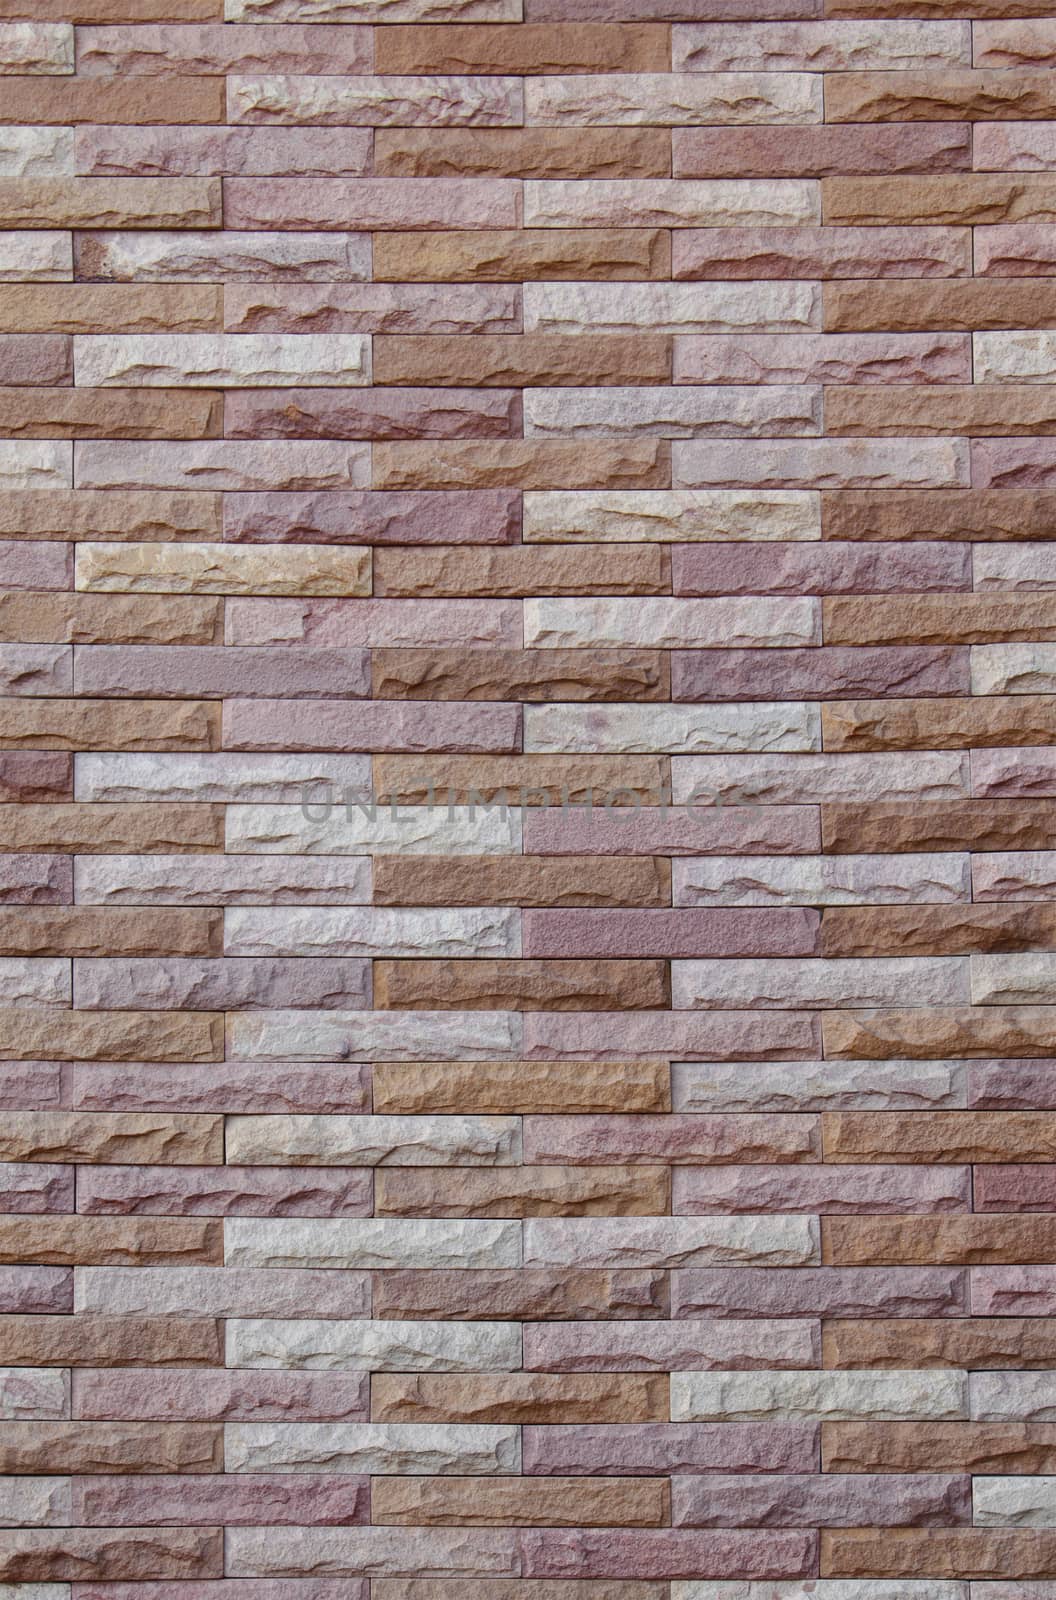 Decorative slate stone wall surface